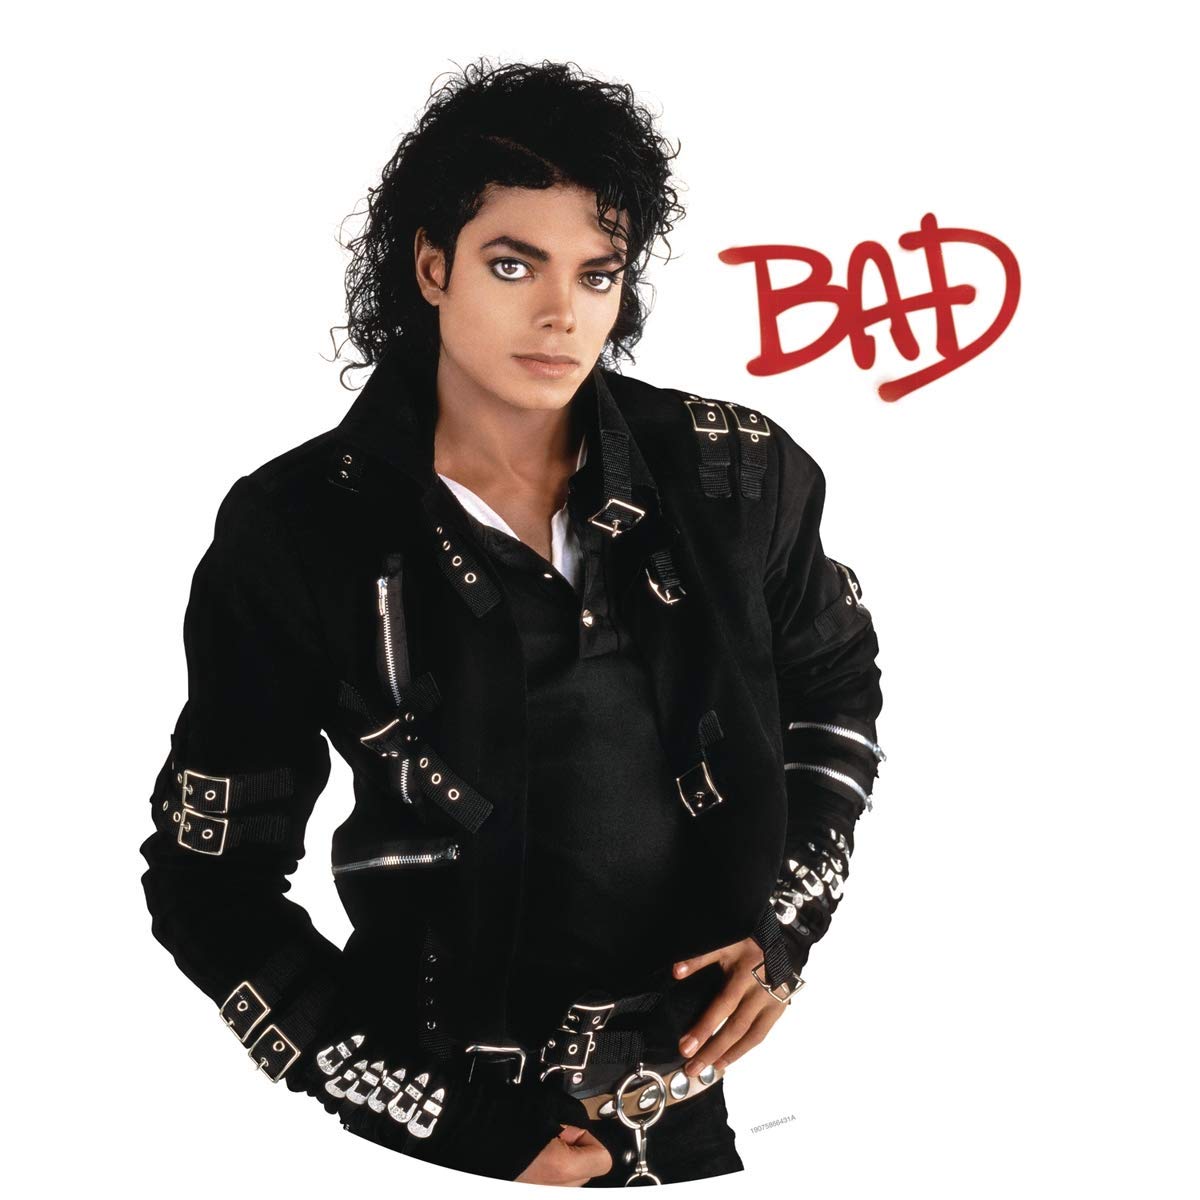 Bad - Vinyl | Michael Jackson